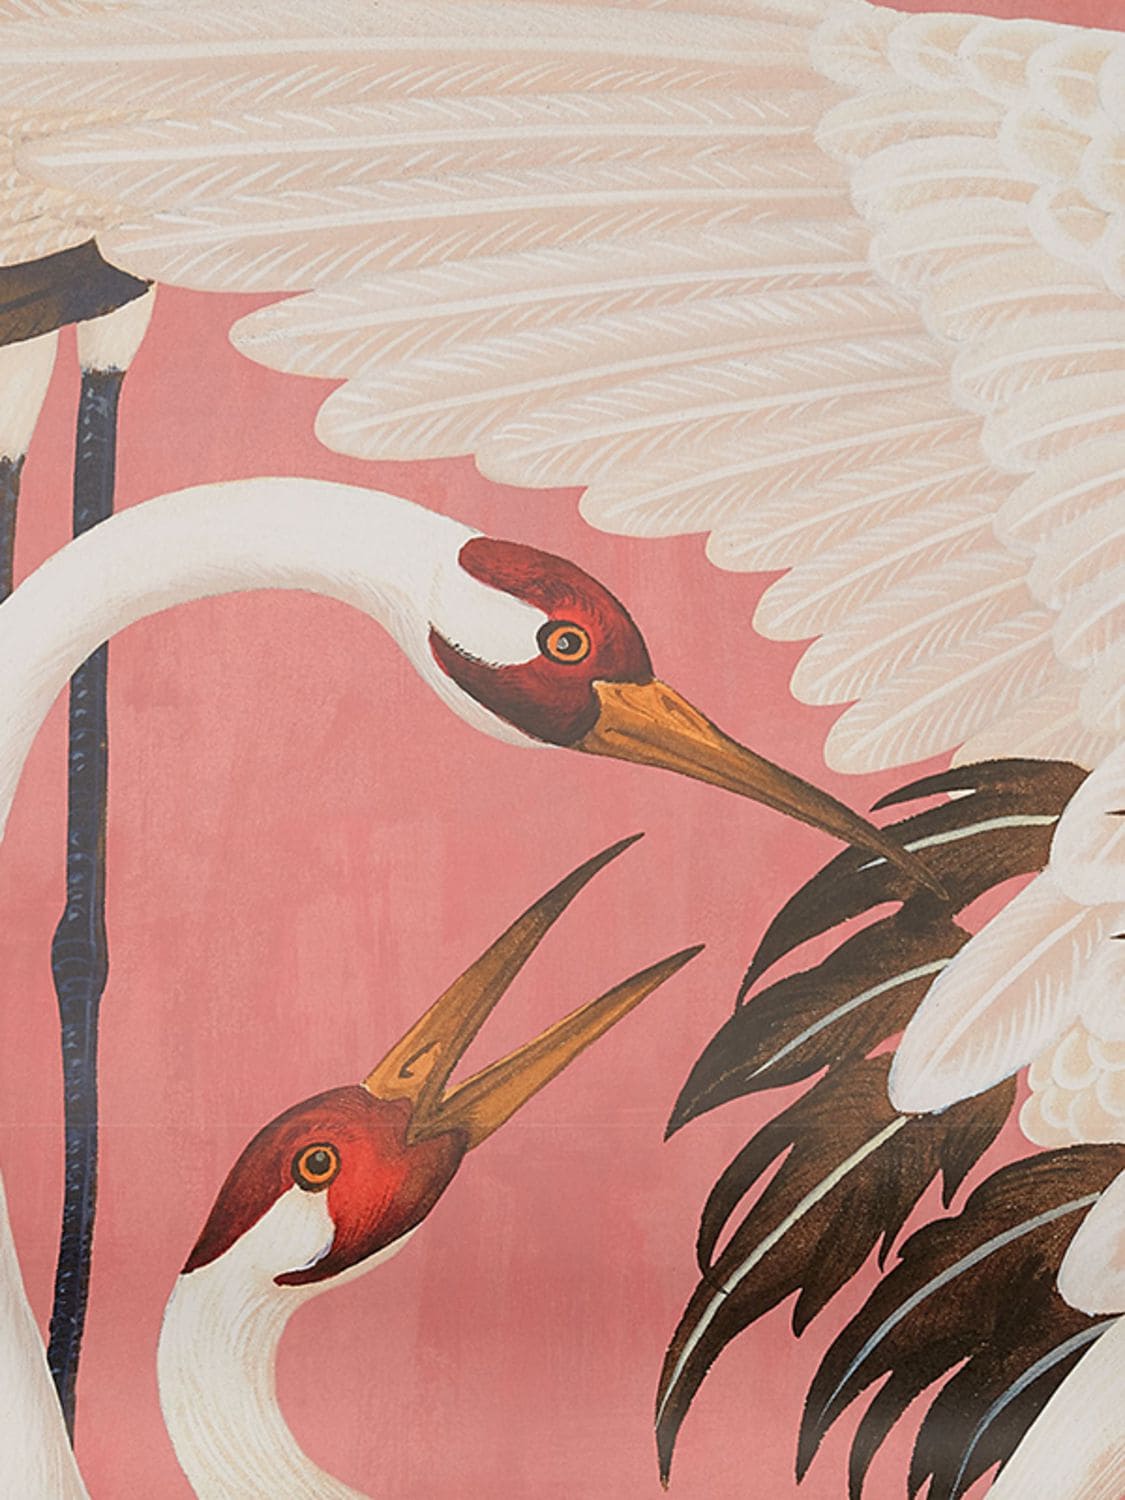 Gucci Heron Print Wallpaper Panels In Pink,multi